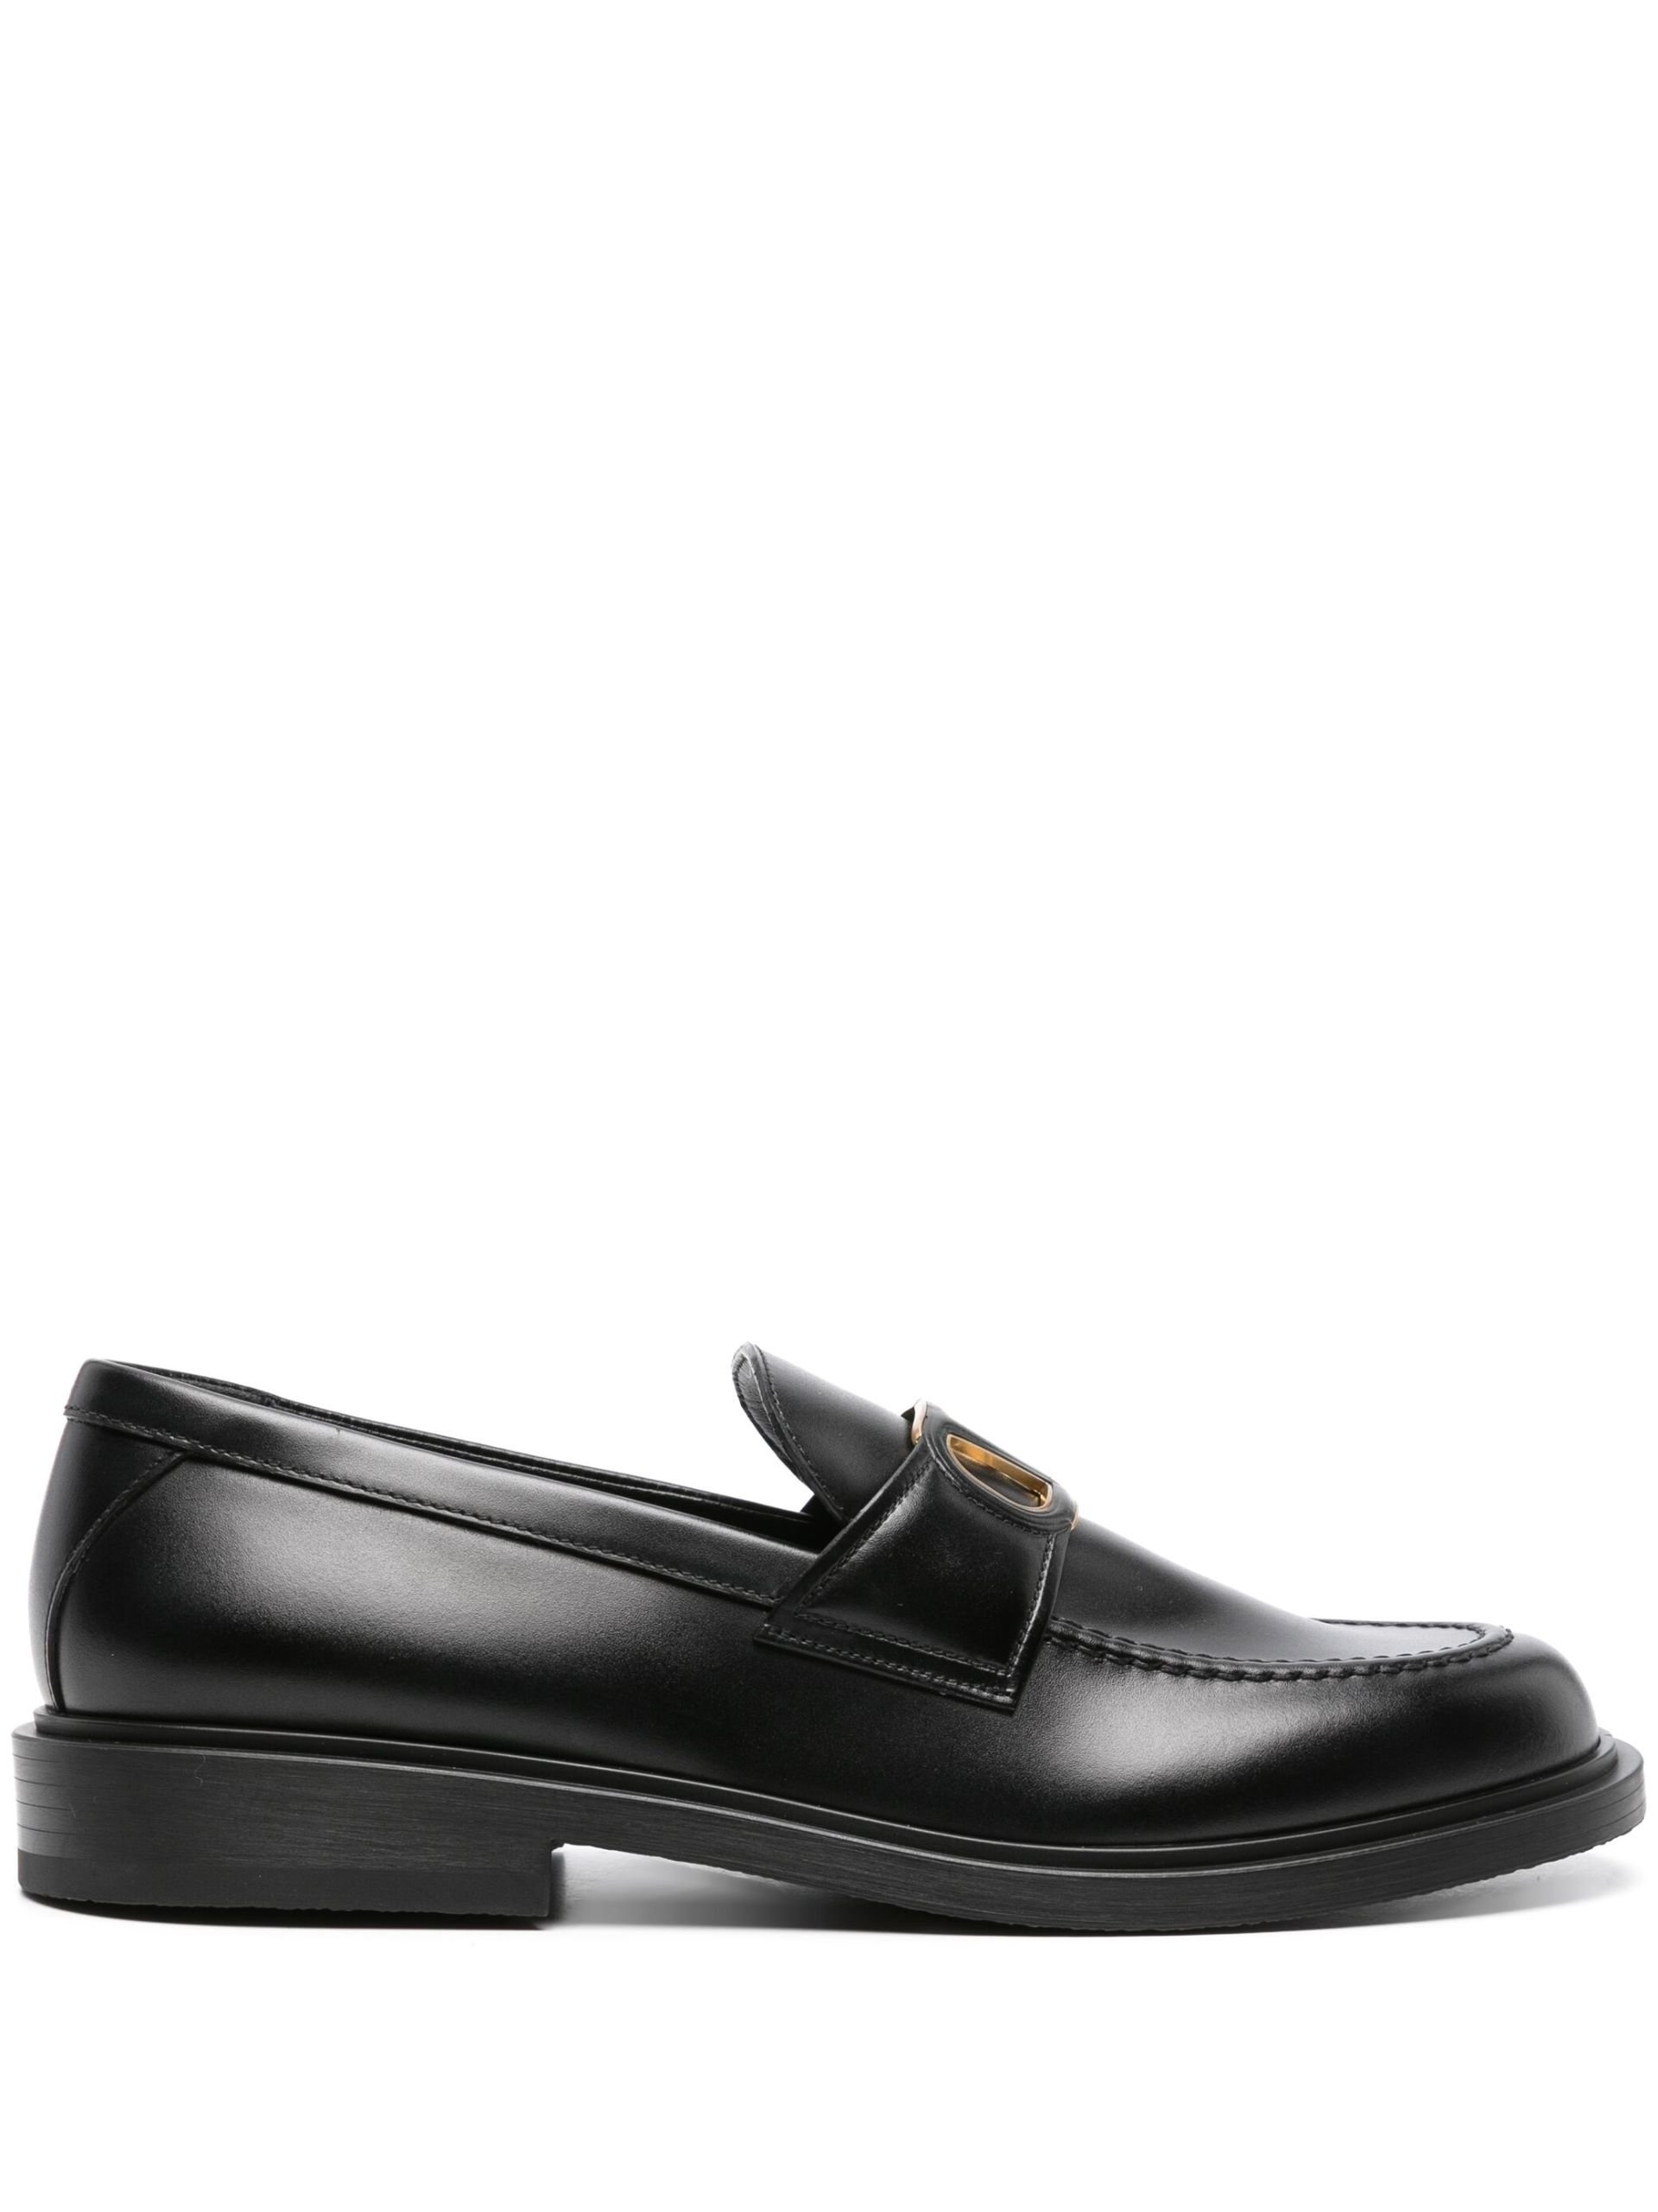 Black VLogo Leather Loafers - 1